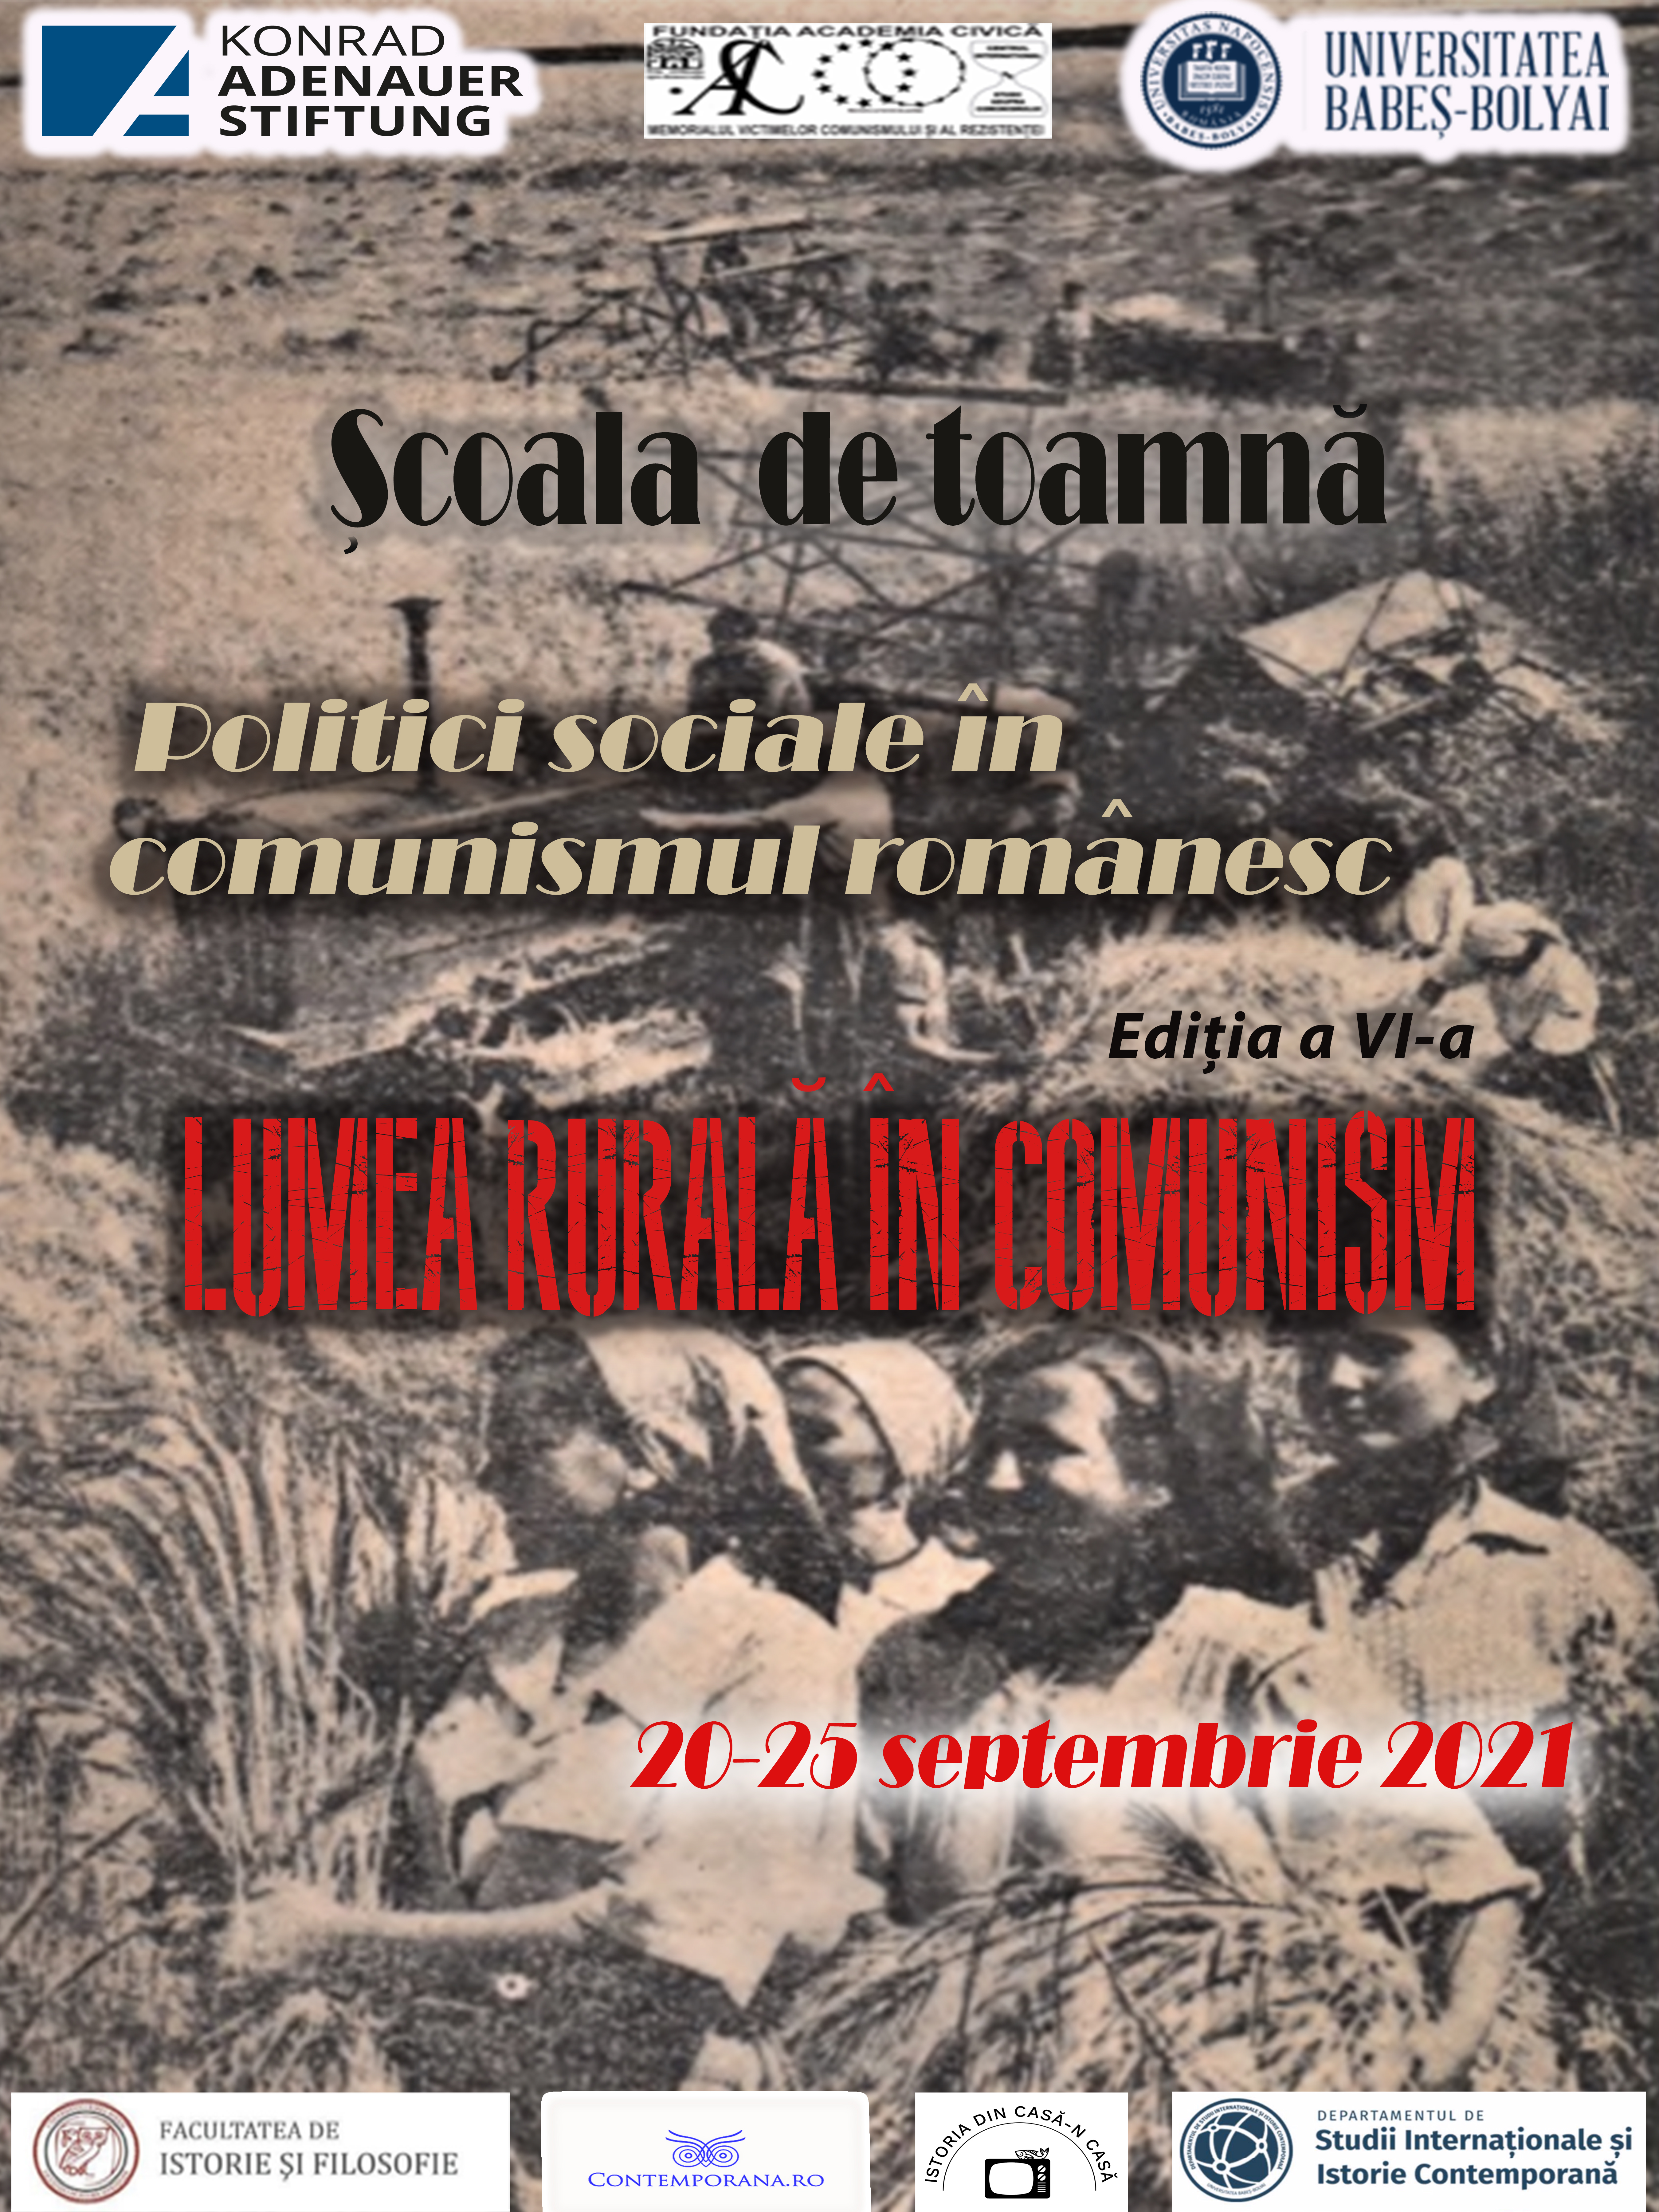 Program English – SOCIAL POLICIES UNDER ROMANIAN COMMUNISM, 6TH EDITION: THE RURAL WORLD IN COMMUNISM